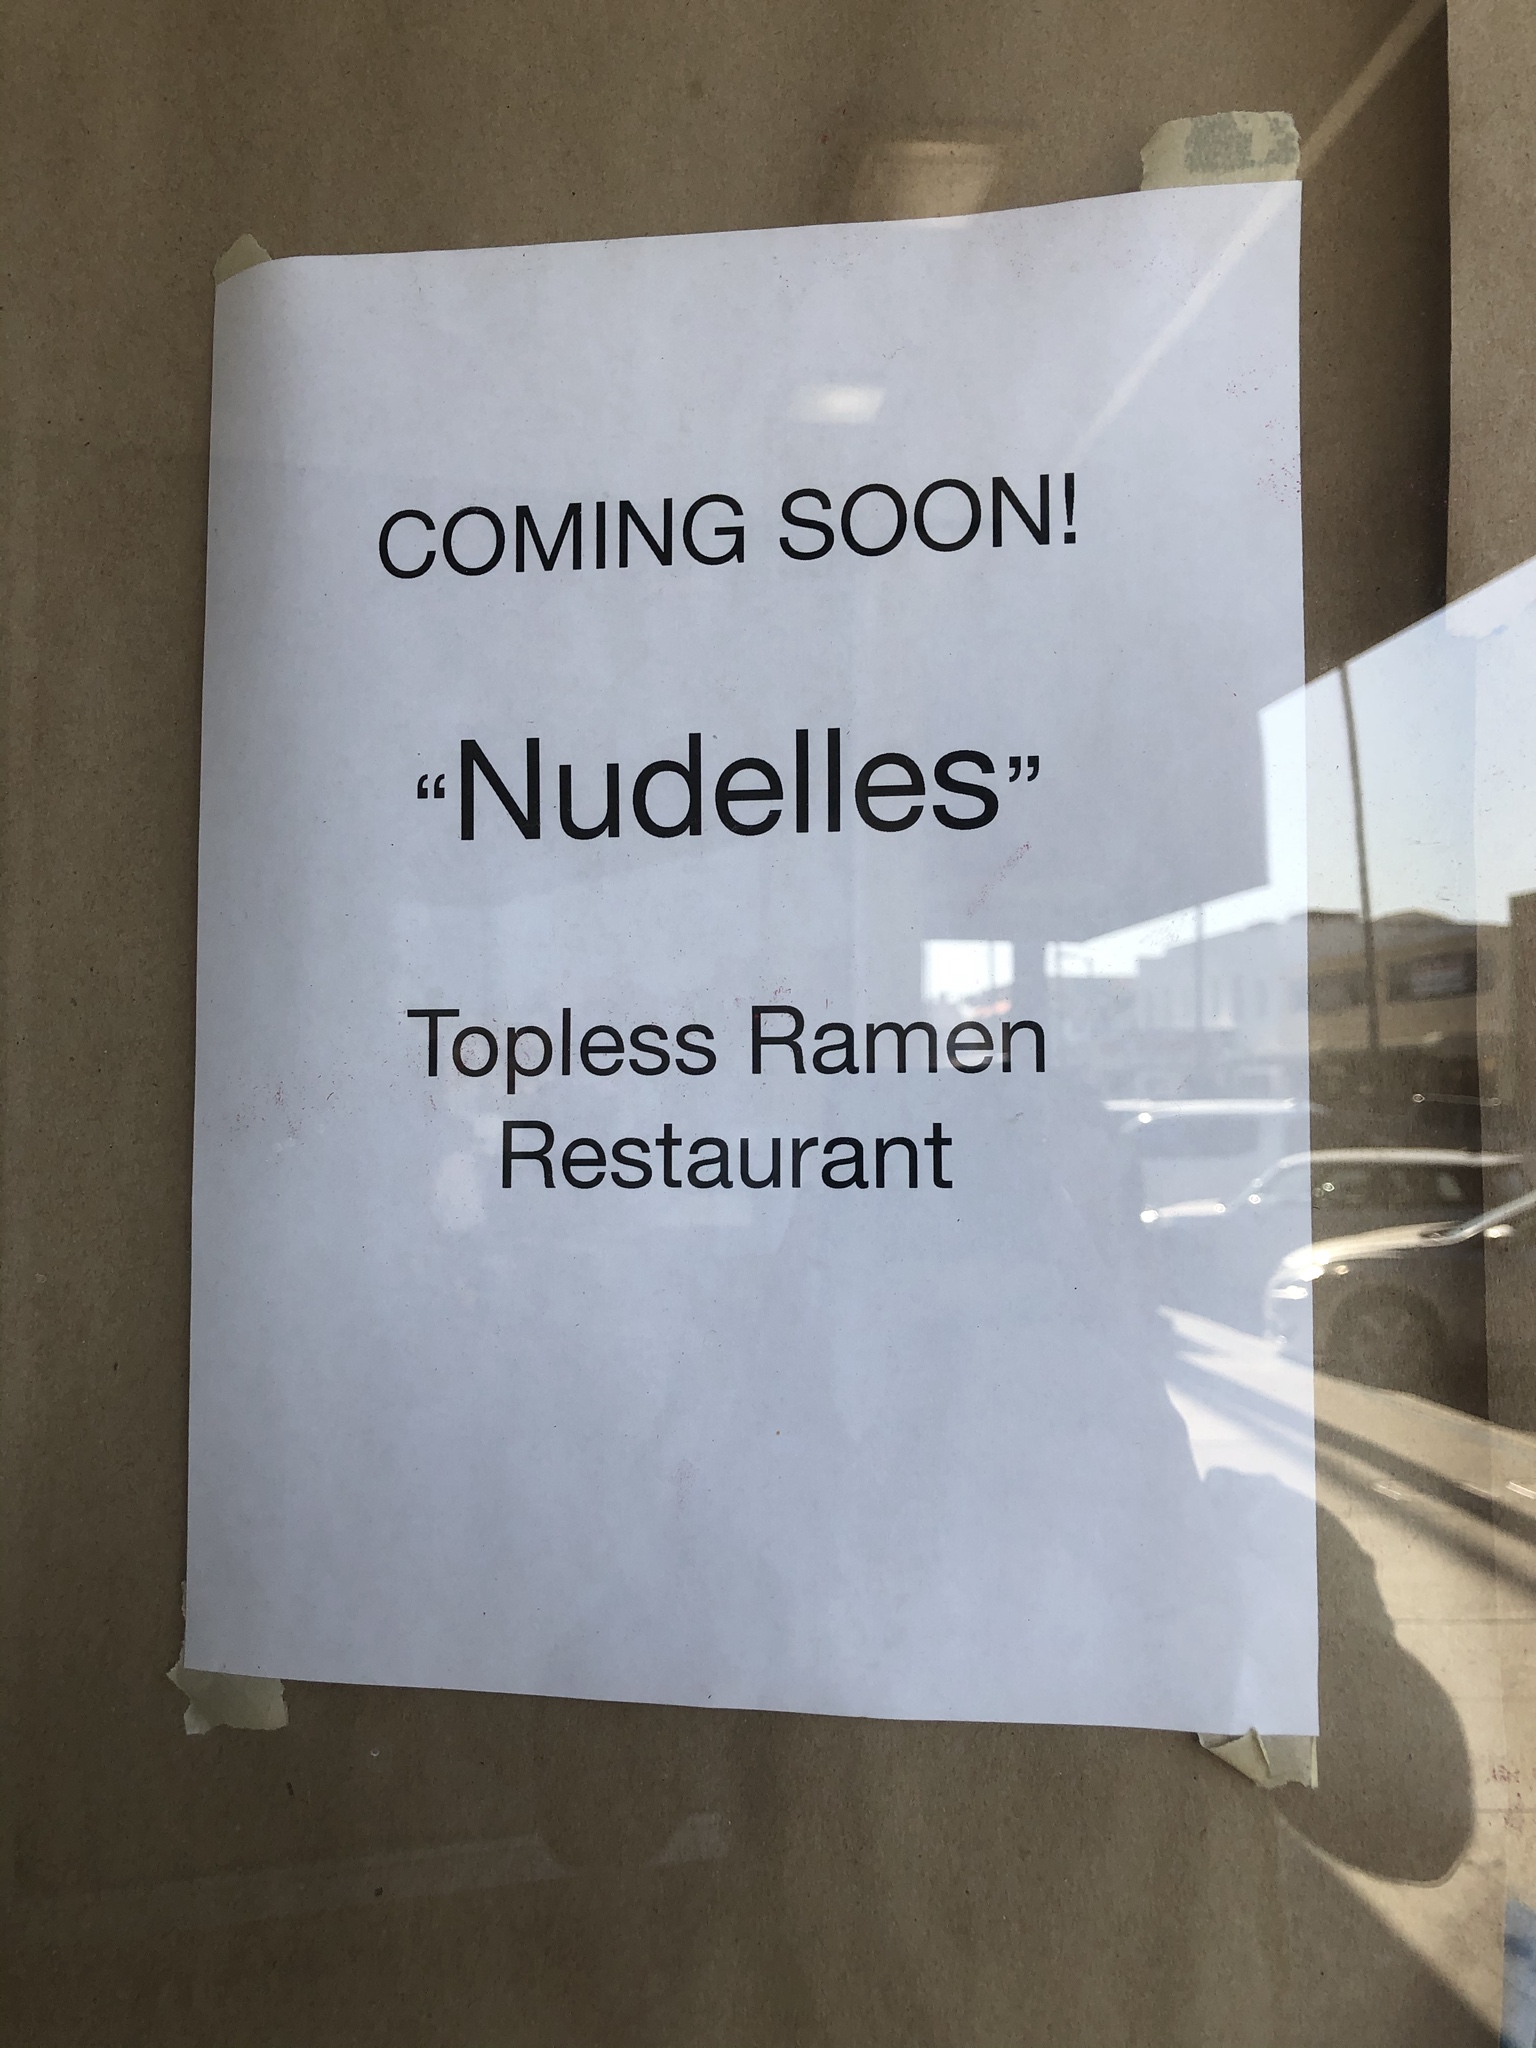 sign - Coming Soon! "Nudelles" Topless Ramen Restaurant